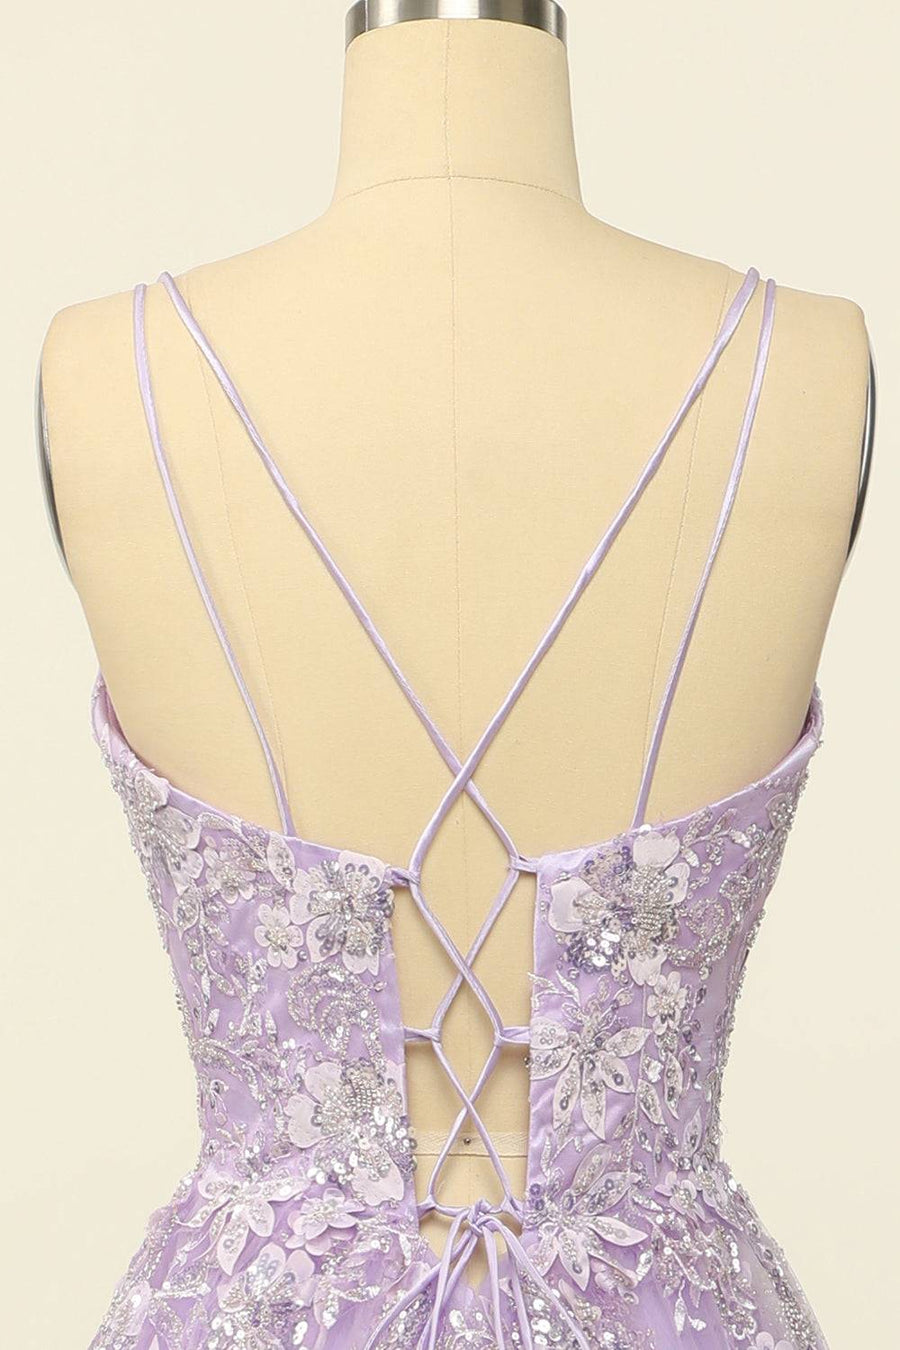 Lilac A-line V Neck Tulle Applique Lace-Up Back Long Prom Dress